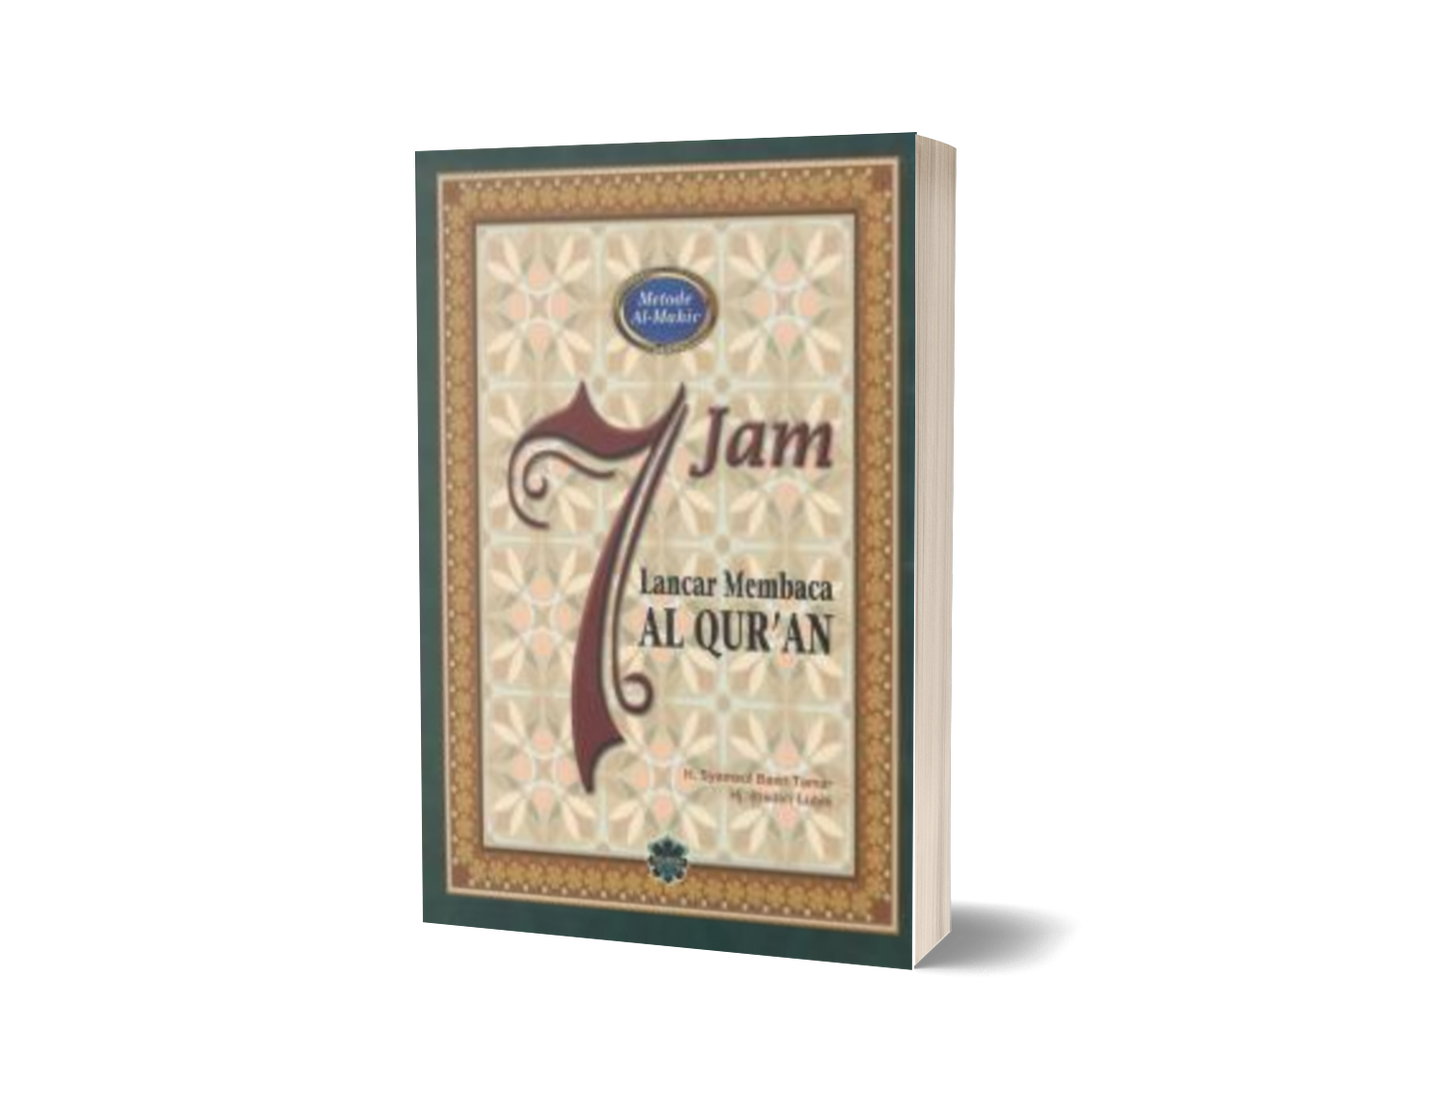 7 Jam Lancar Membaca Al-Qur'an